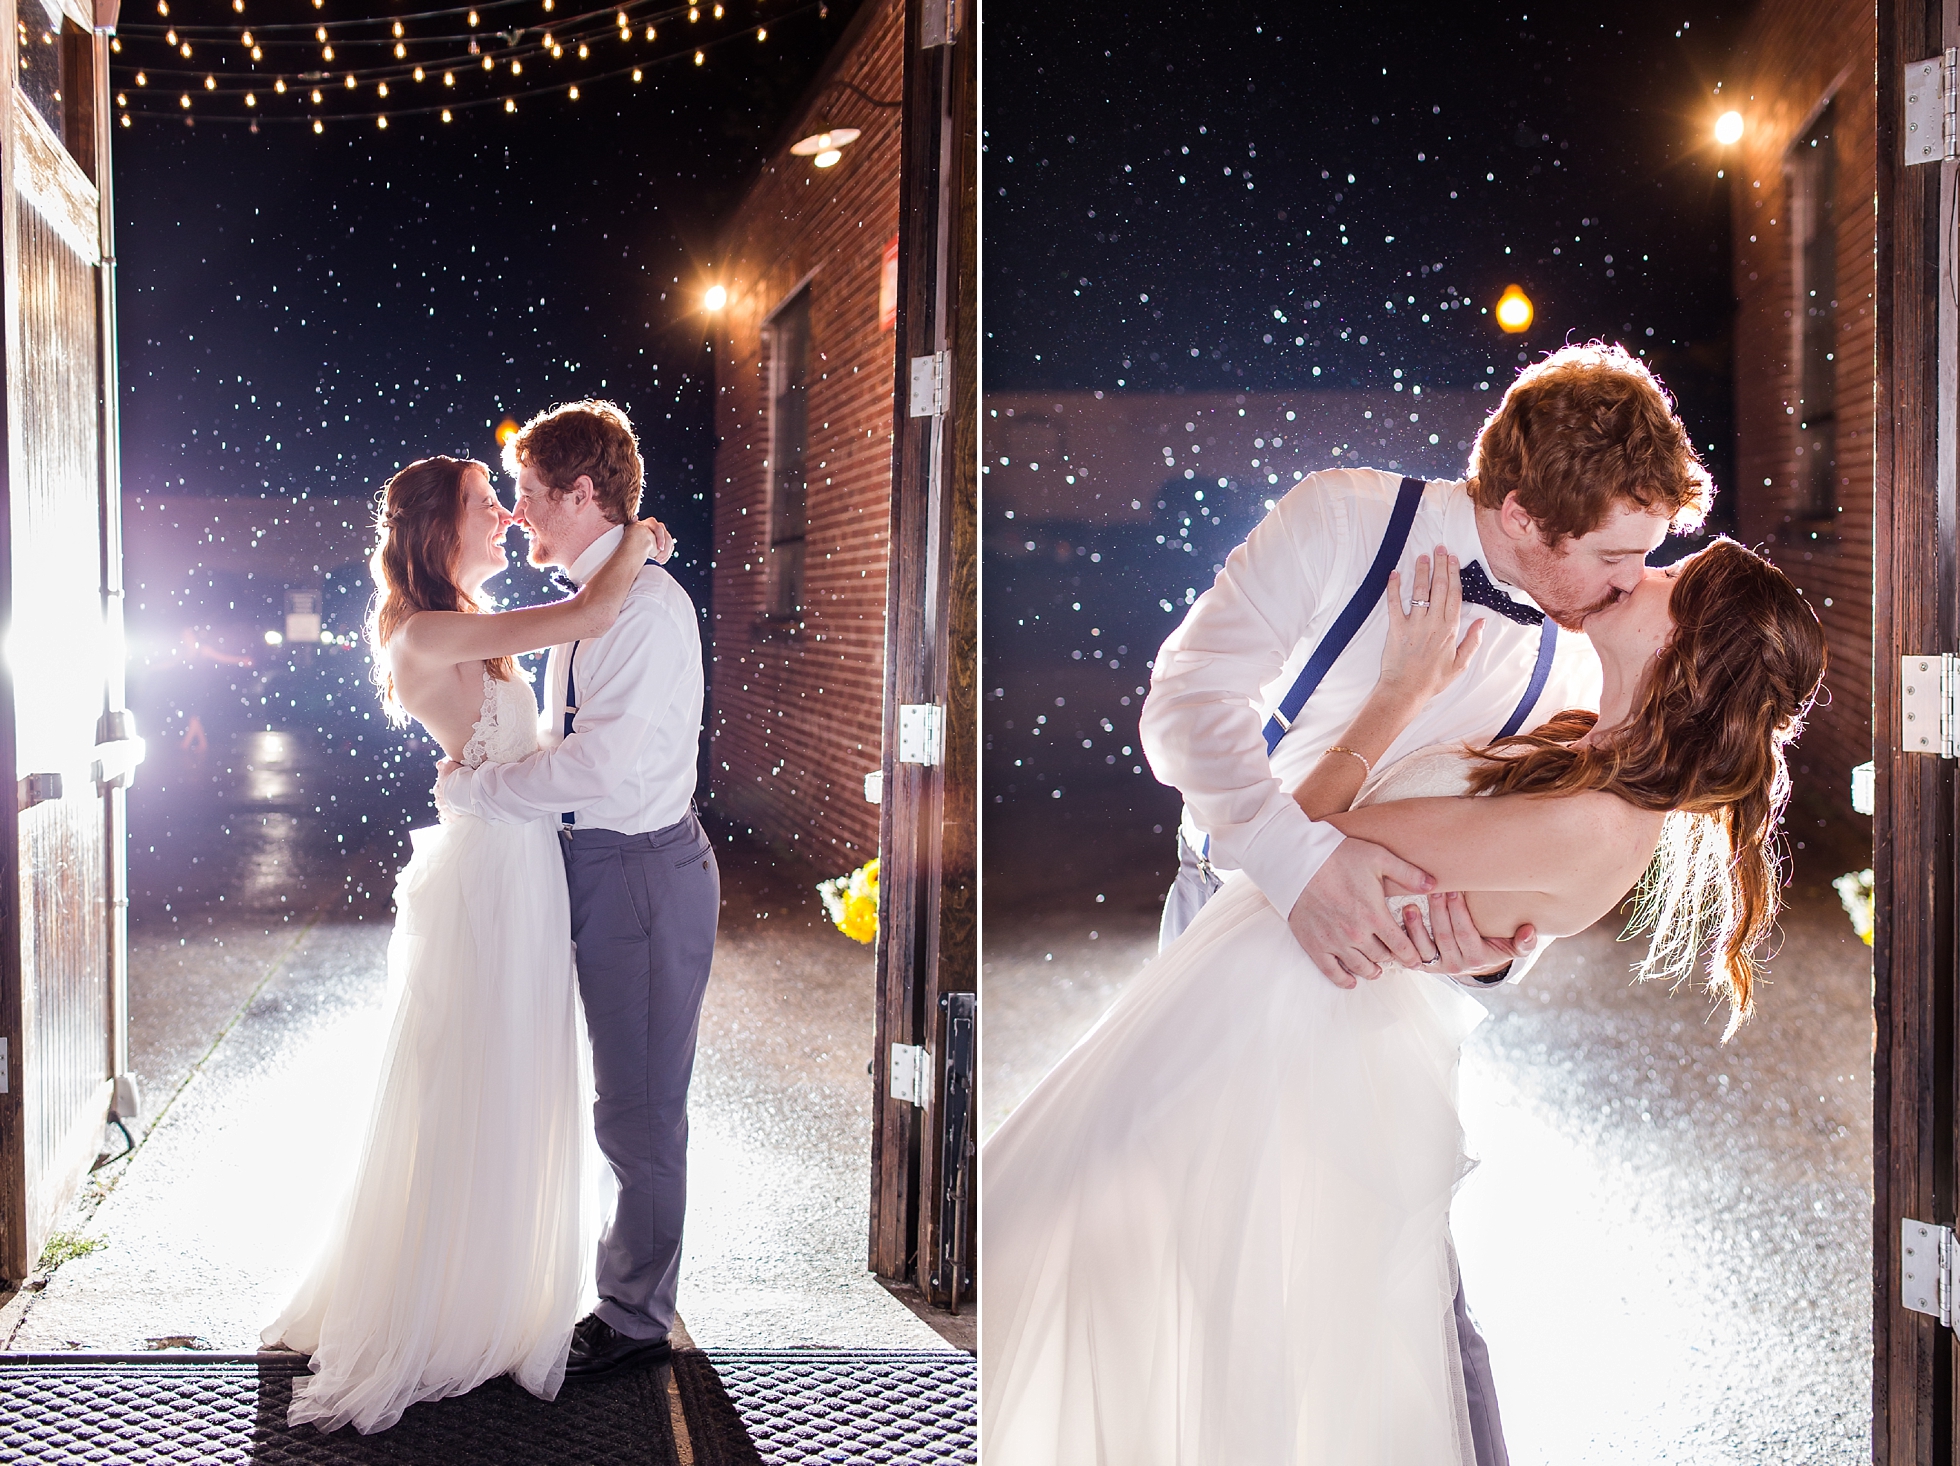 rain night nighttime raindrops wedding photos